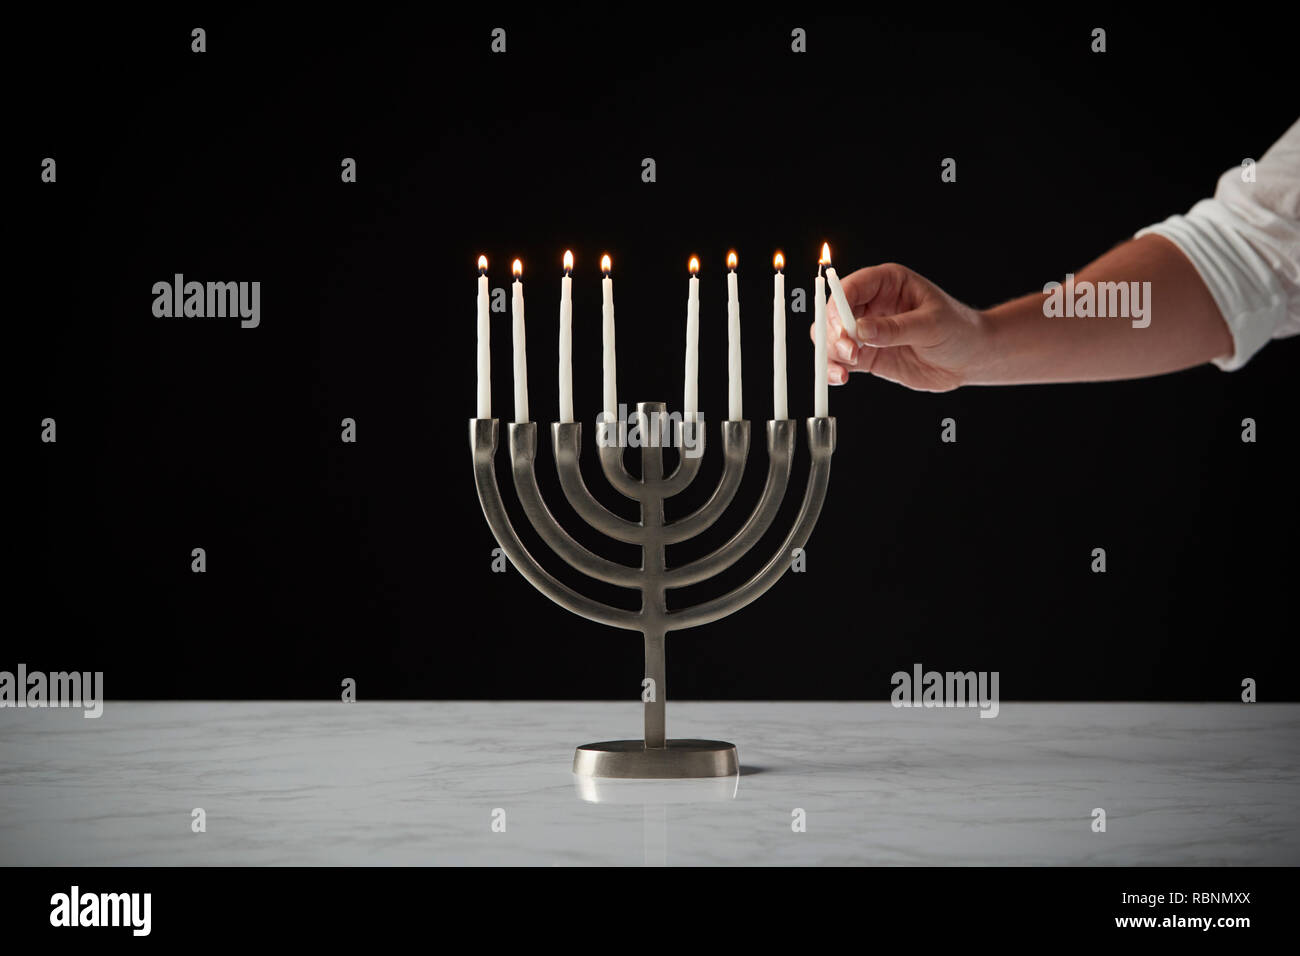 Hand Lighting Candle On Metal Hanukkah Menorah On Marble Surface Against Black Studio Background Stock Photo